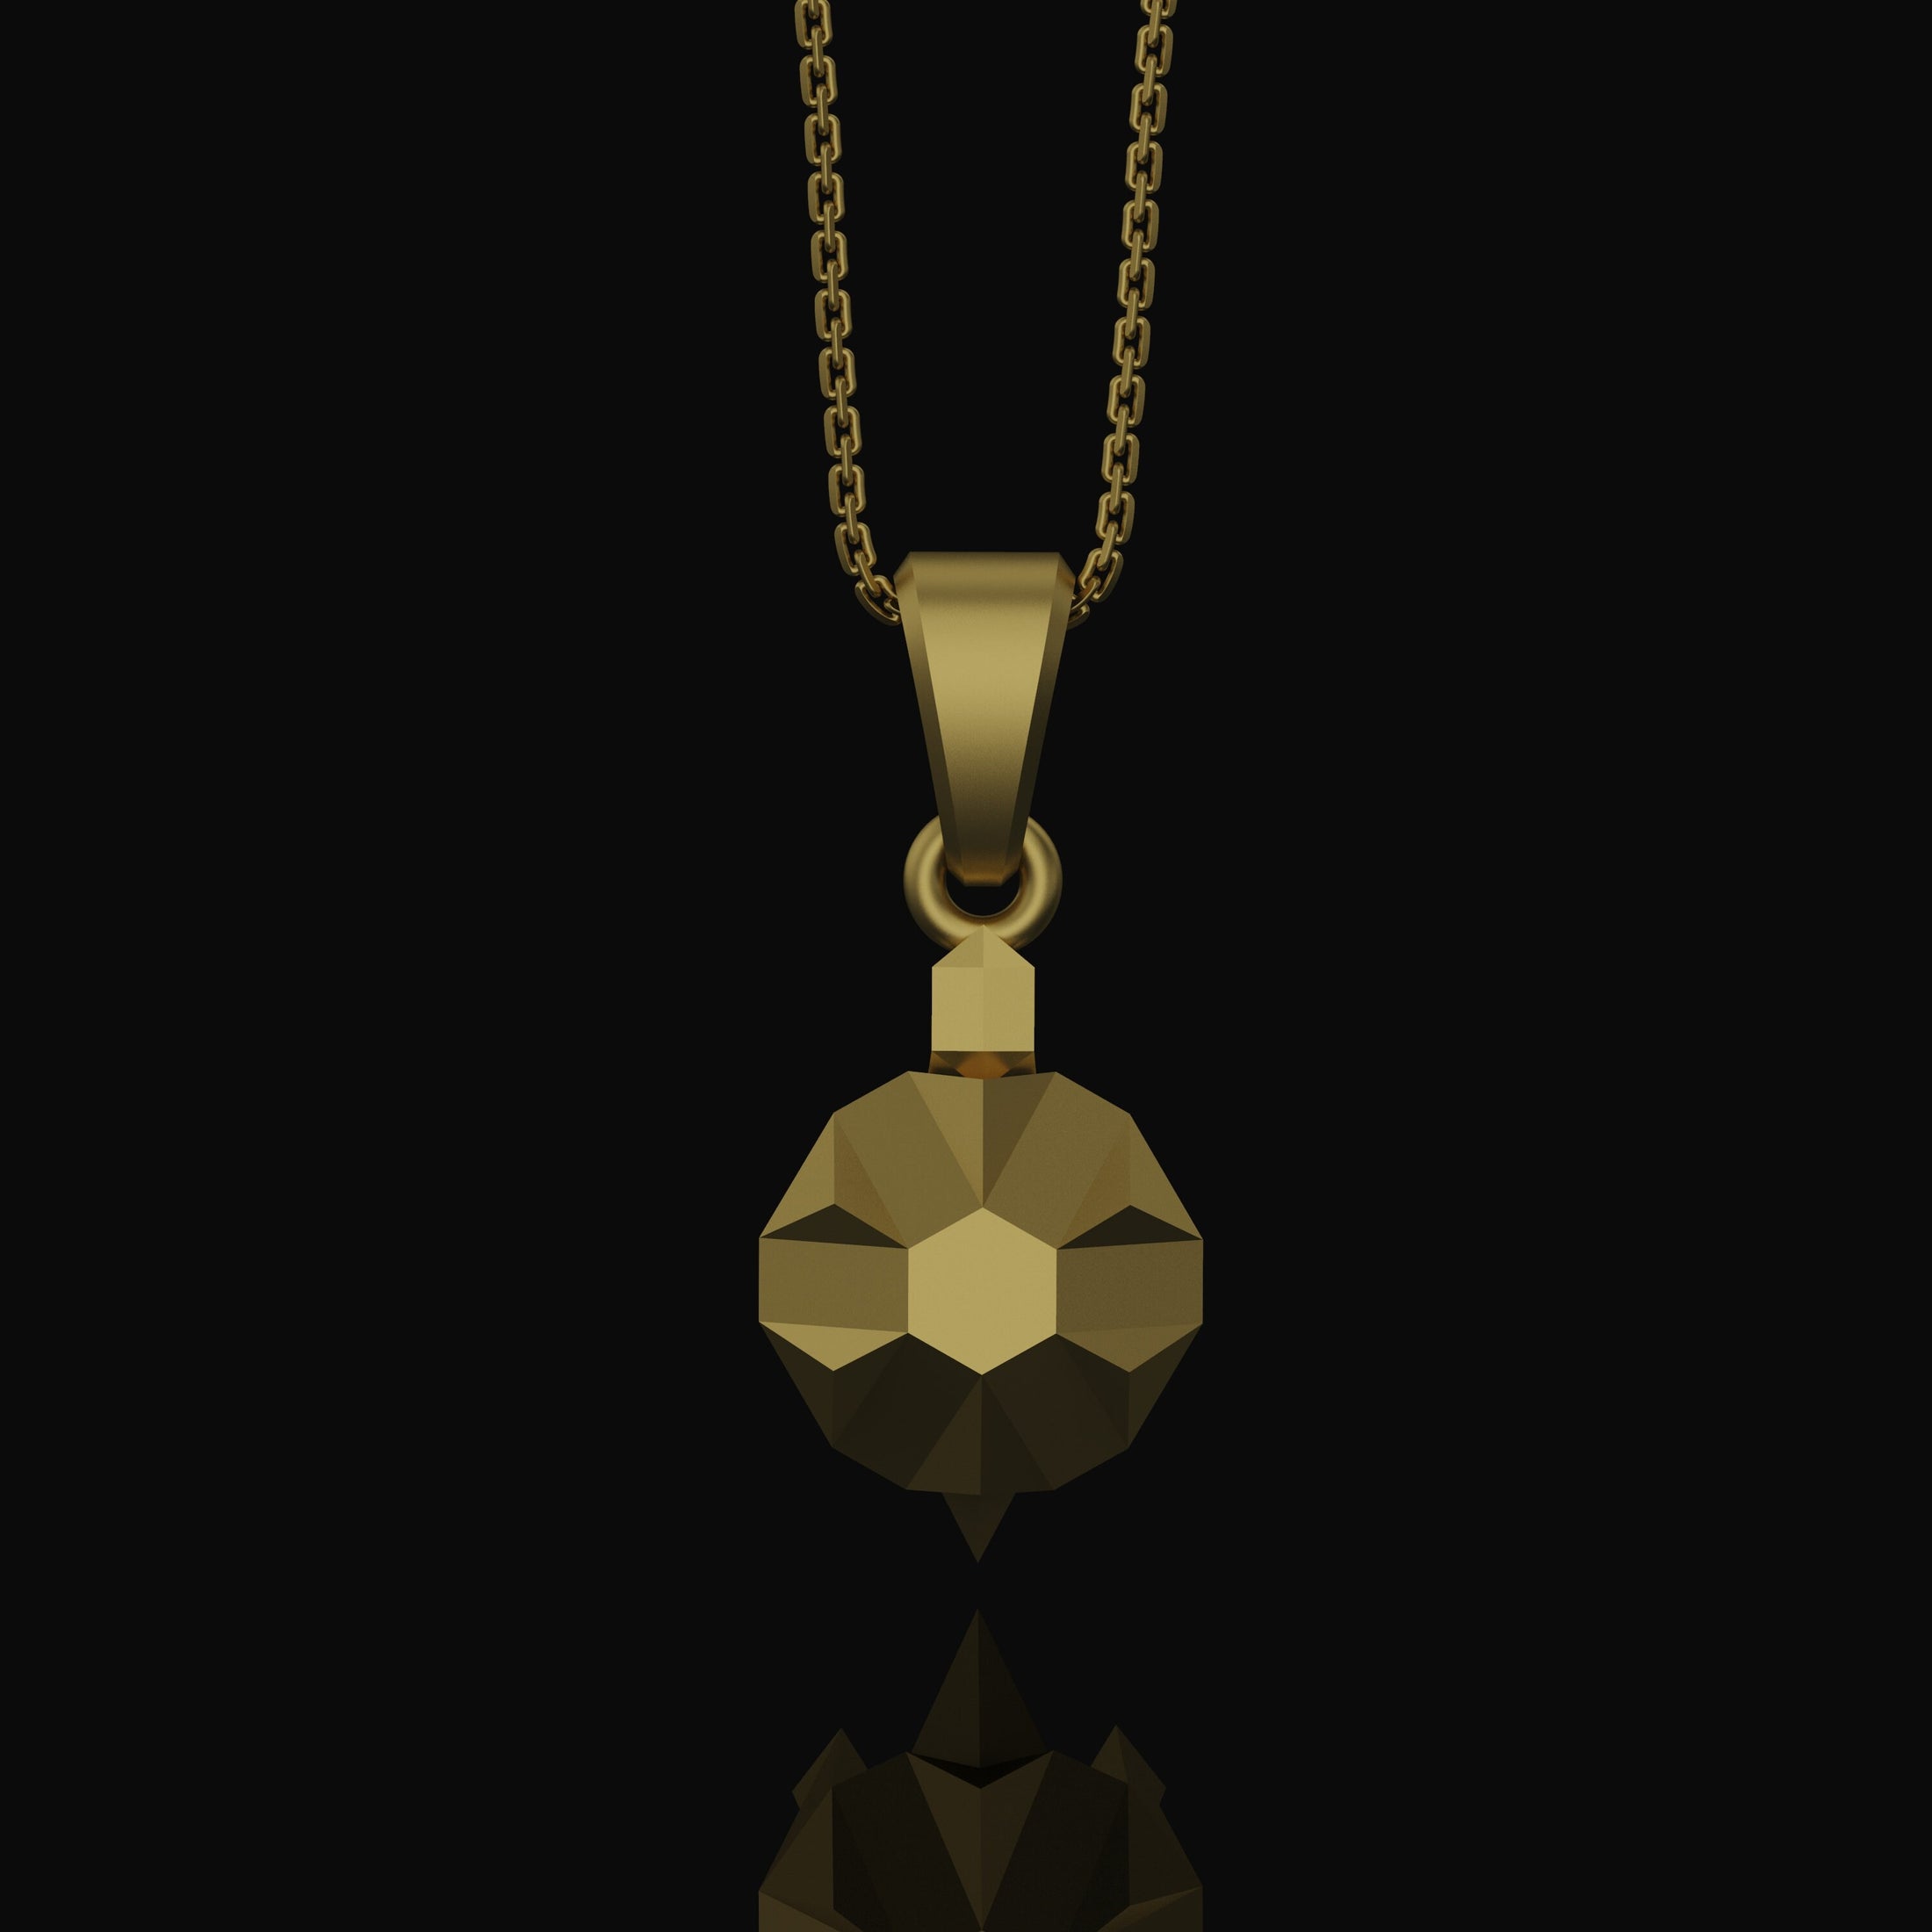 Origami Tortoise Charm Necklace - Silver Geometrical Pendant, Elegant Folded Turtle Design, Unique Artistic Jewelry Gold Finish